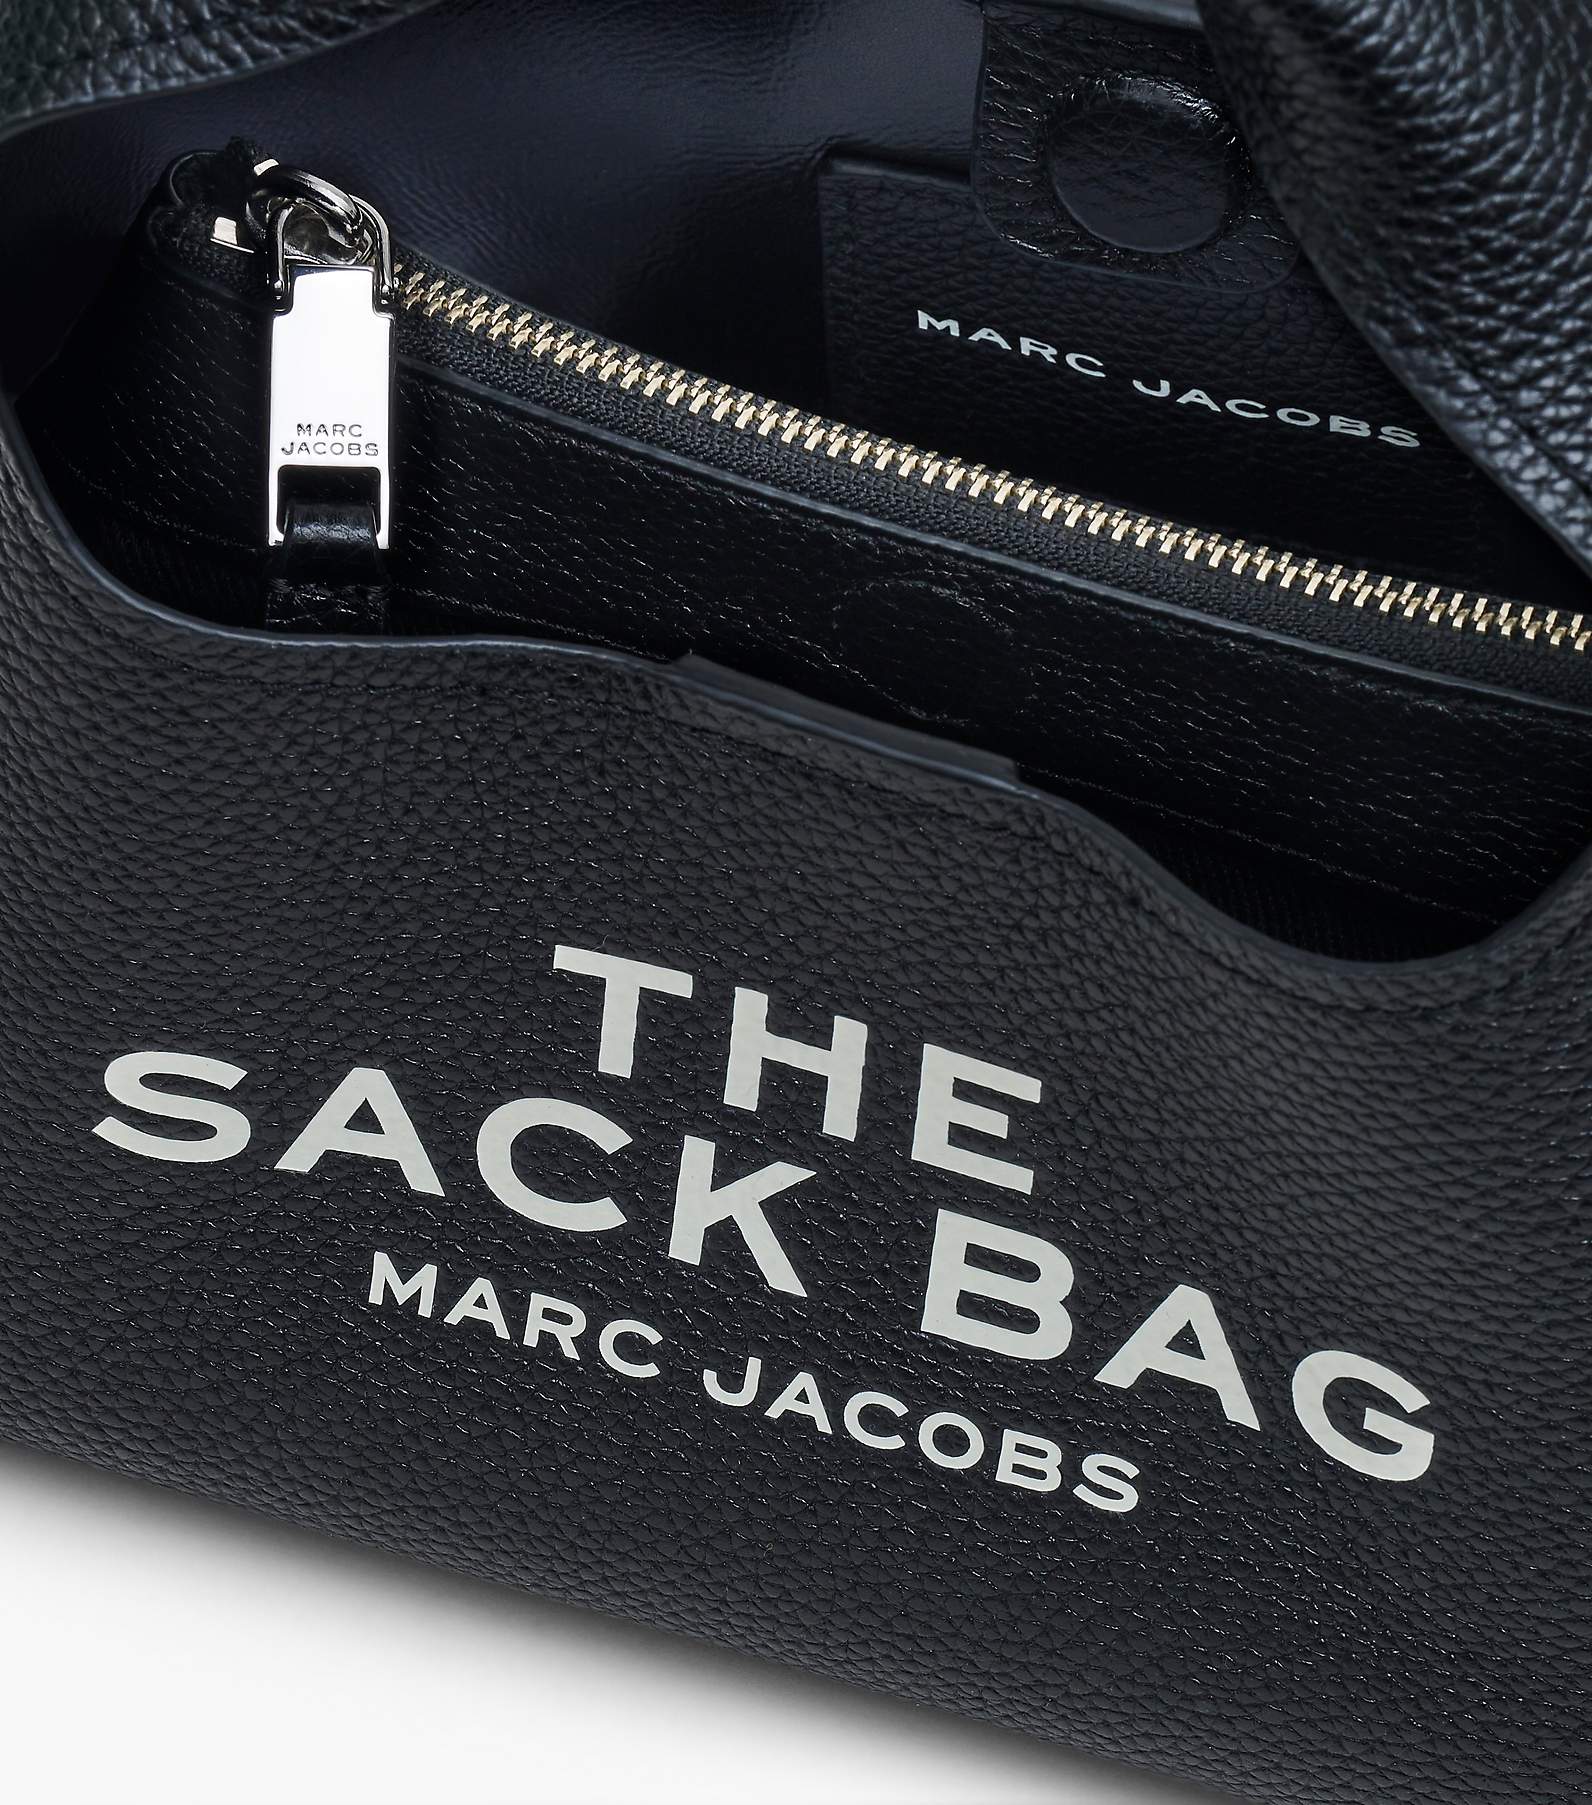 The Mini Sack Bag | Marc Jacobs | Official Site